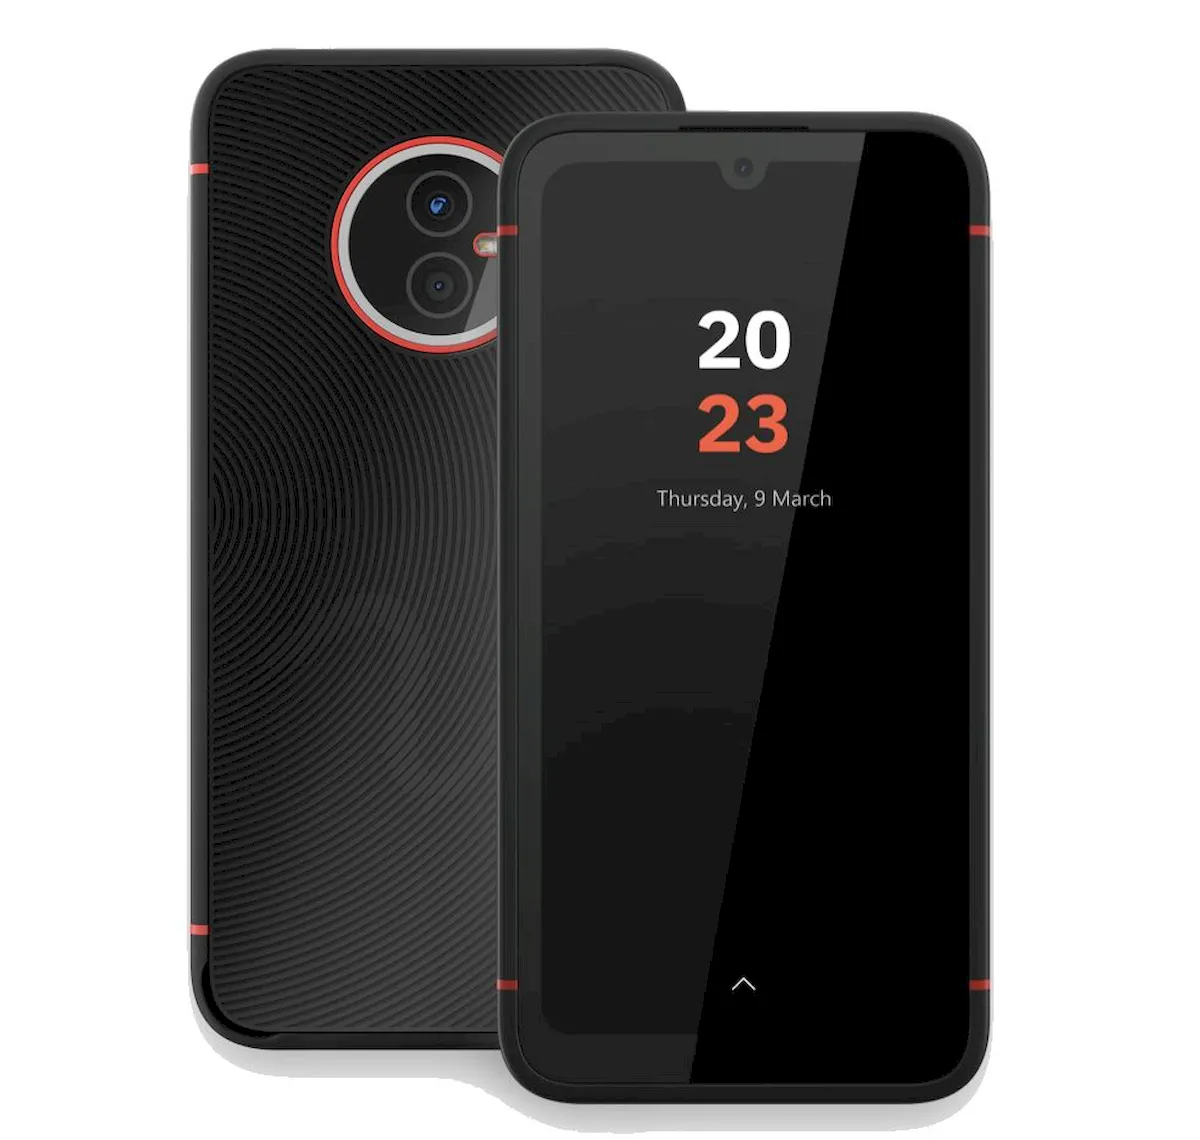 Volla Phone X23, um telefone que roda Android ou Ubuntu Touch